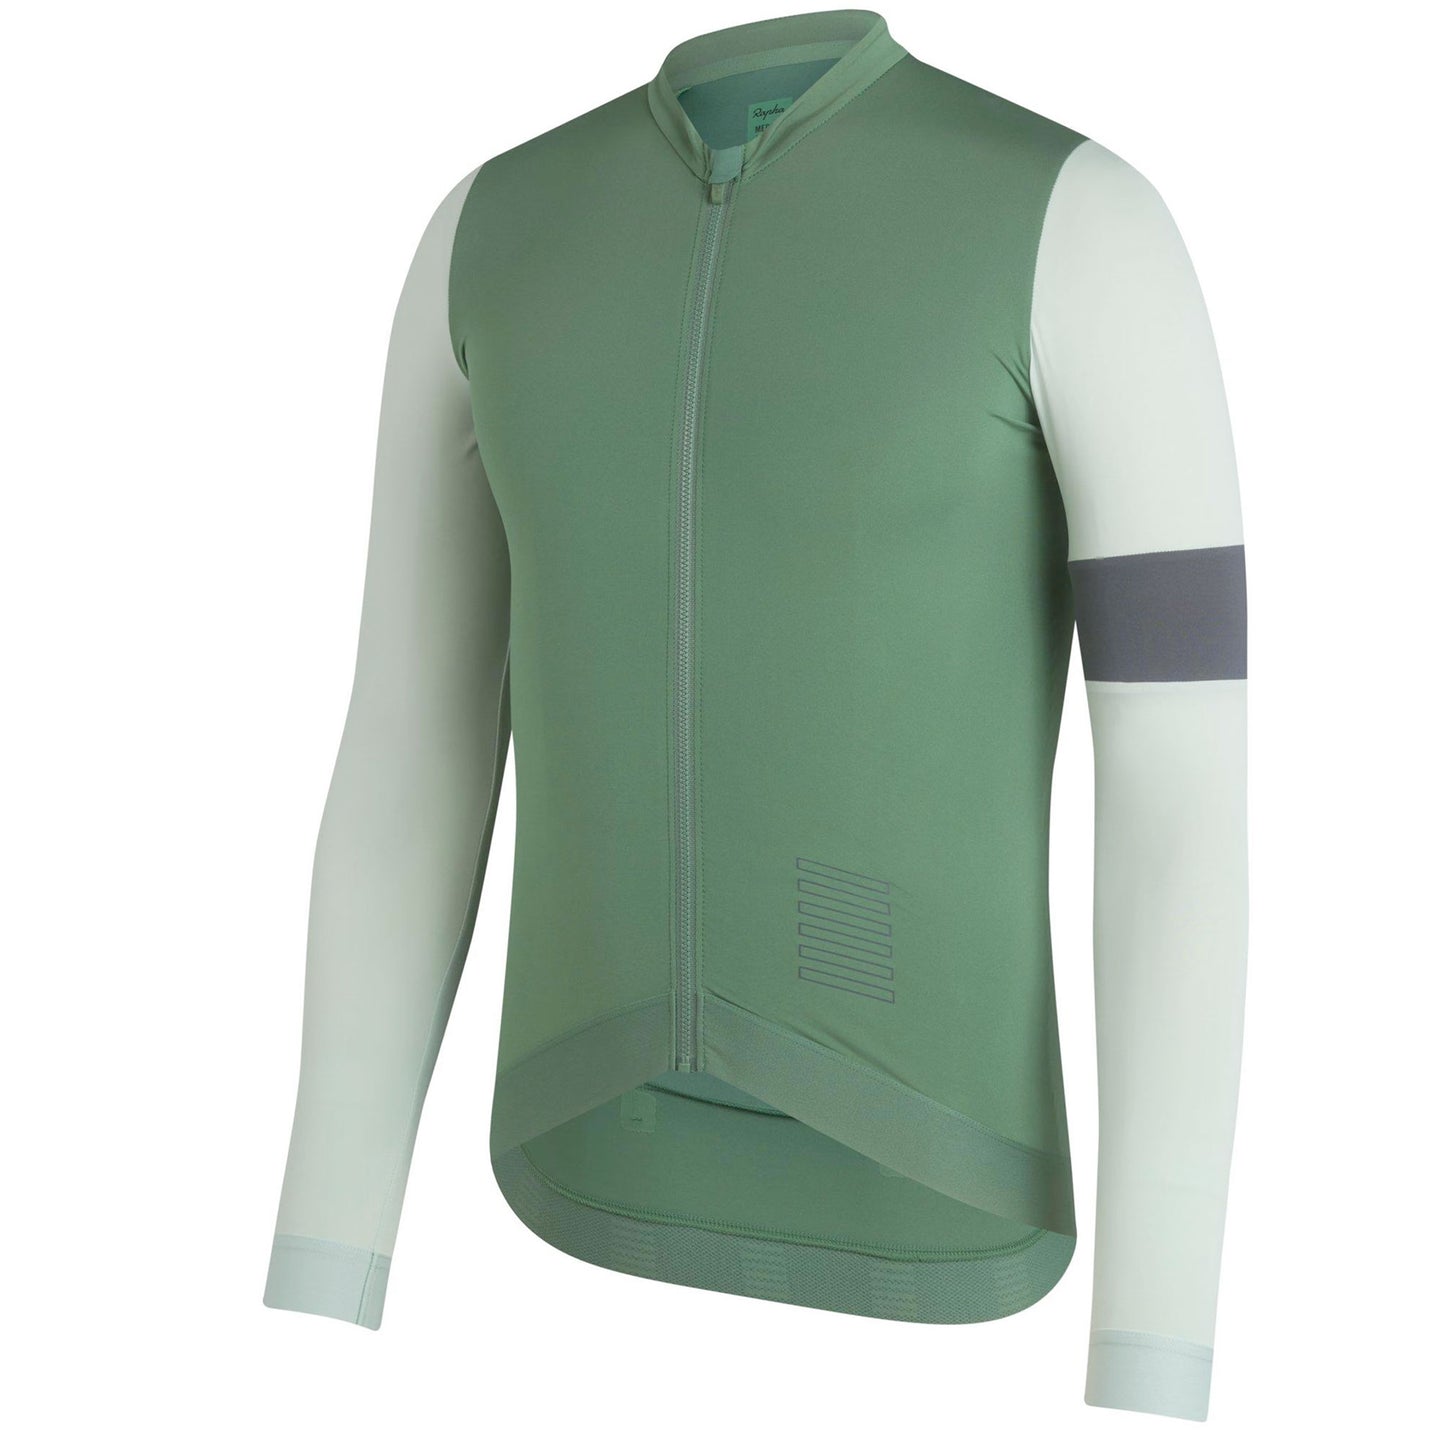 Rapha Pro Team Long Sleeve Training Jersey, Dark Green/Pale Green buy online